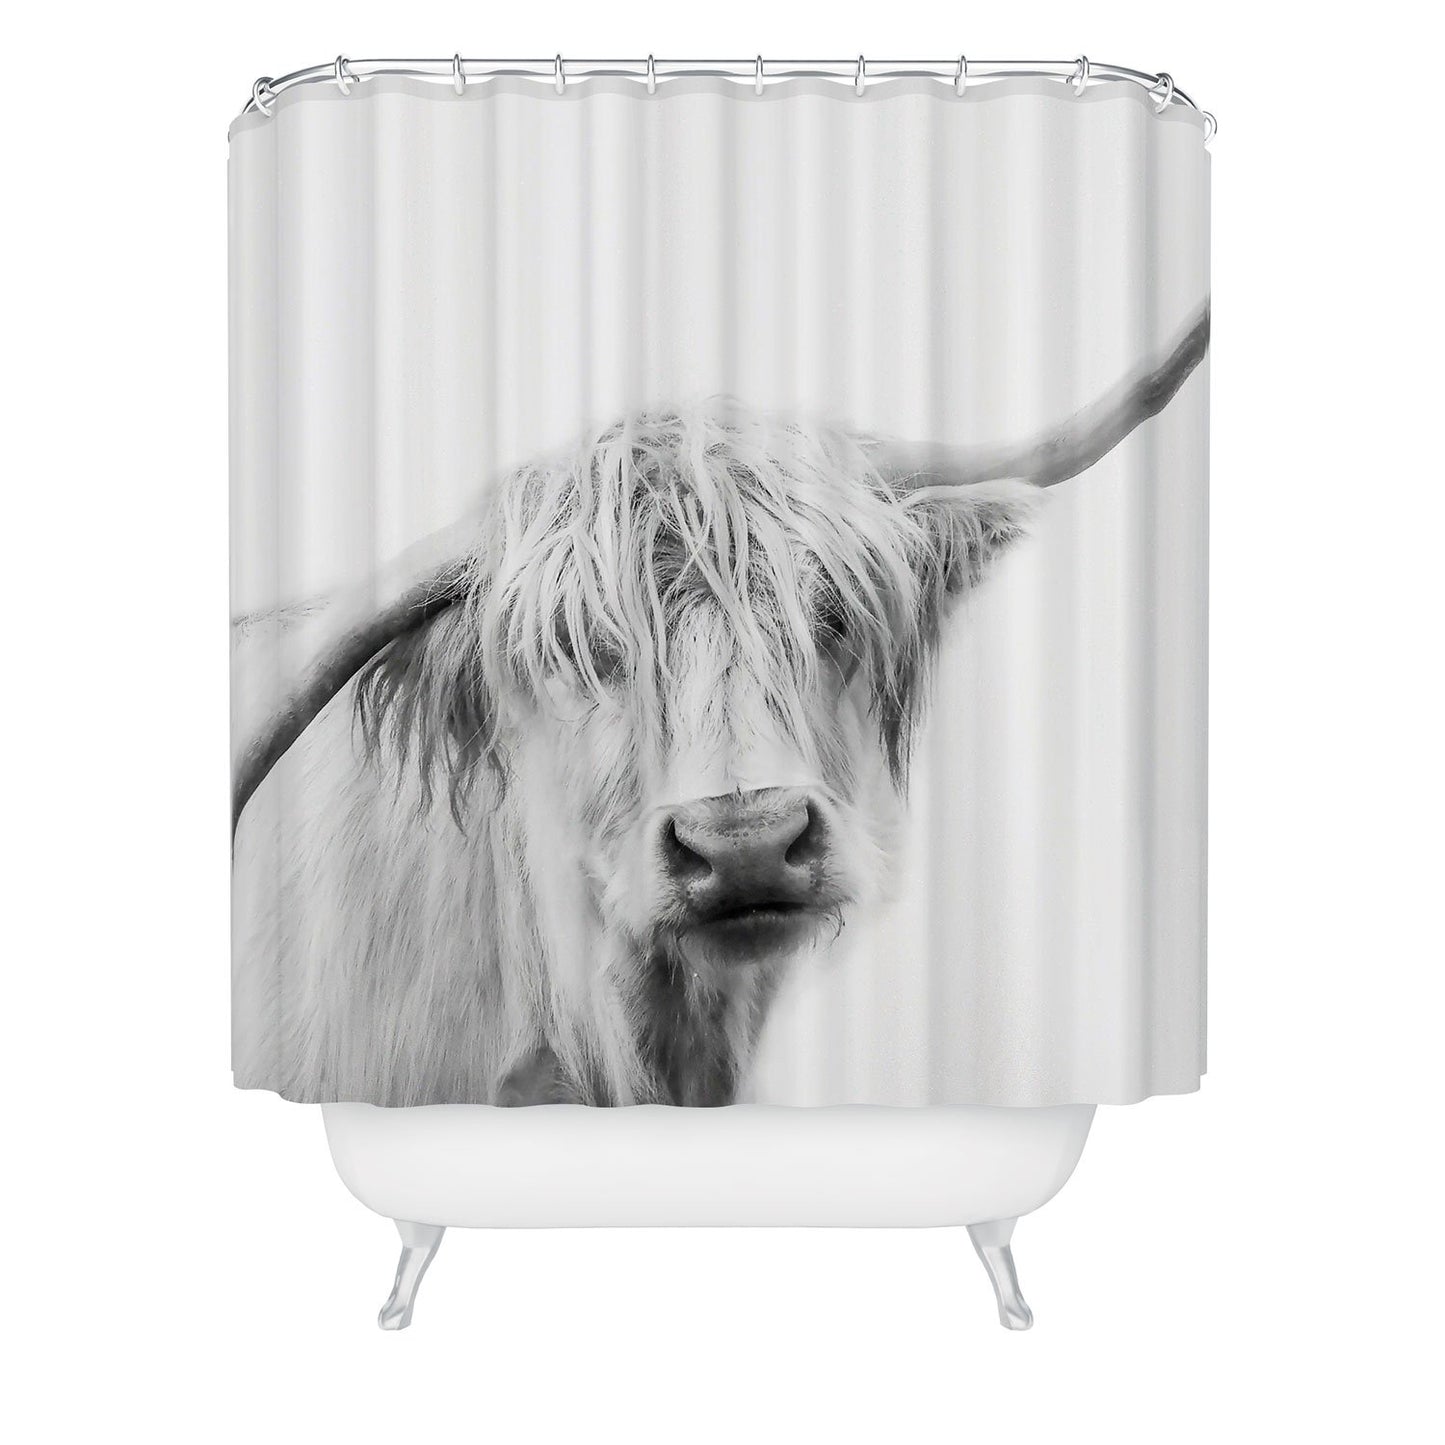 Highland Cow Shower Curtain - bath, bathroom, bathroom decor, bathroomdecor, cow, cows, cowss, curtain, cute cows, decor, hairy, hairy cows, hairycow, highland, highland cow, highland cows, highlandbull, highlandcattle, highlandcow, highlandcows, highlander, highlanders, highlands, home, ILOVECOWS, love cows, ranch, rodeo, shower, shower curtains, shower curtians, western, westernbath, westernhomedecor, westernshowercurtain -  - Baha Ranch Western Wear